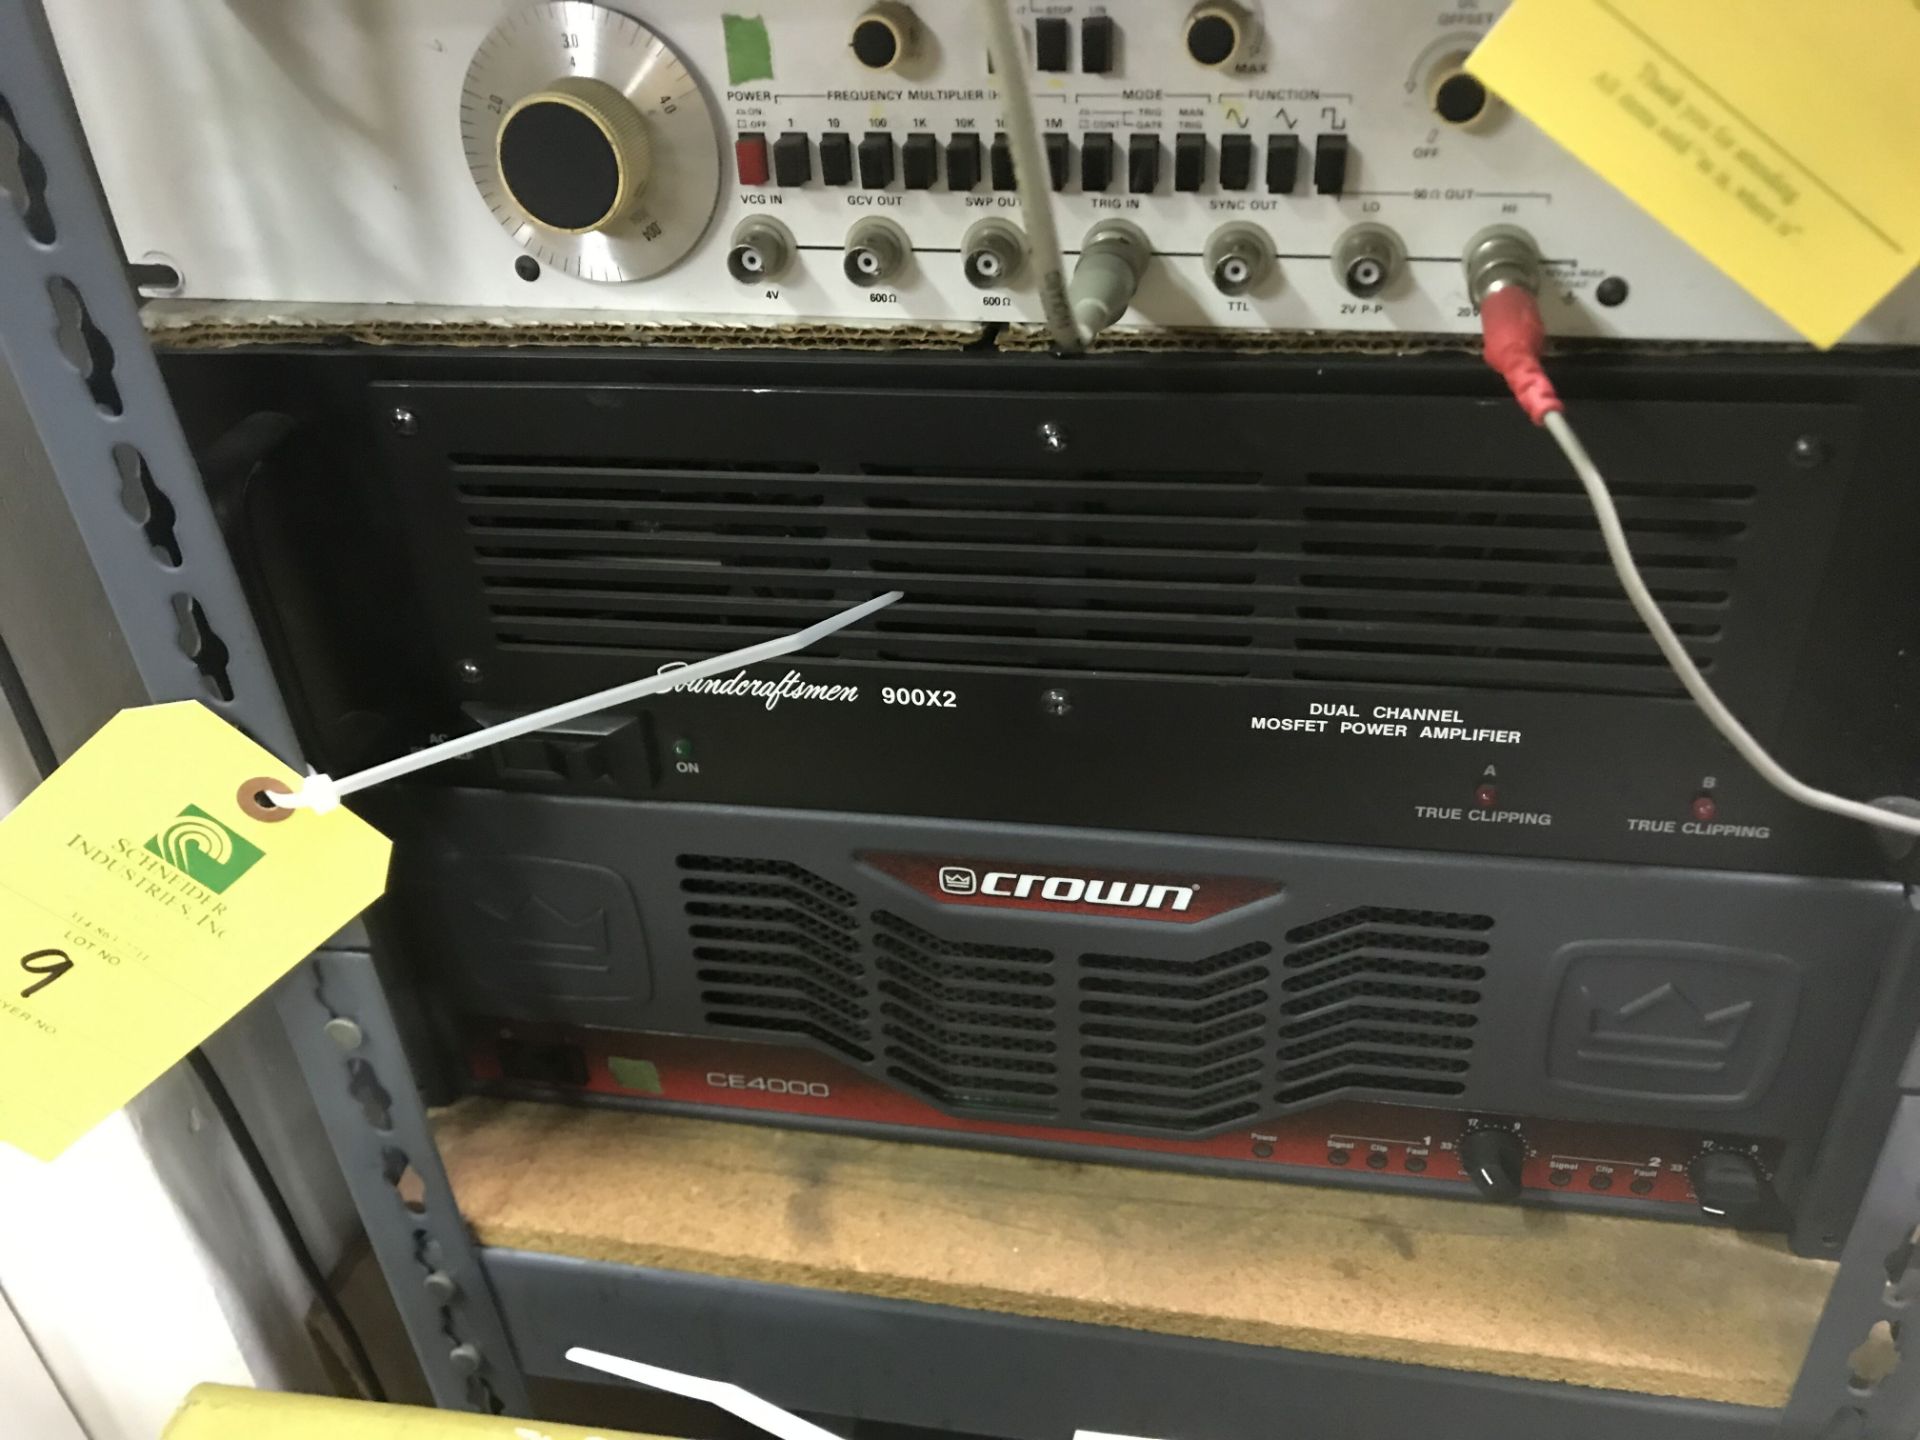 Soundcraftsment 900X2 Moset Power Amp & Crown CE4000 Amp.